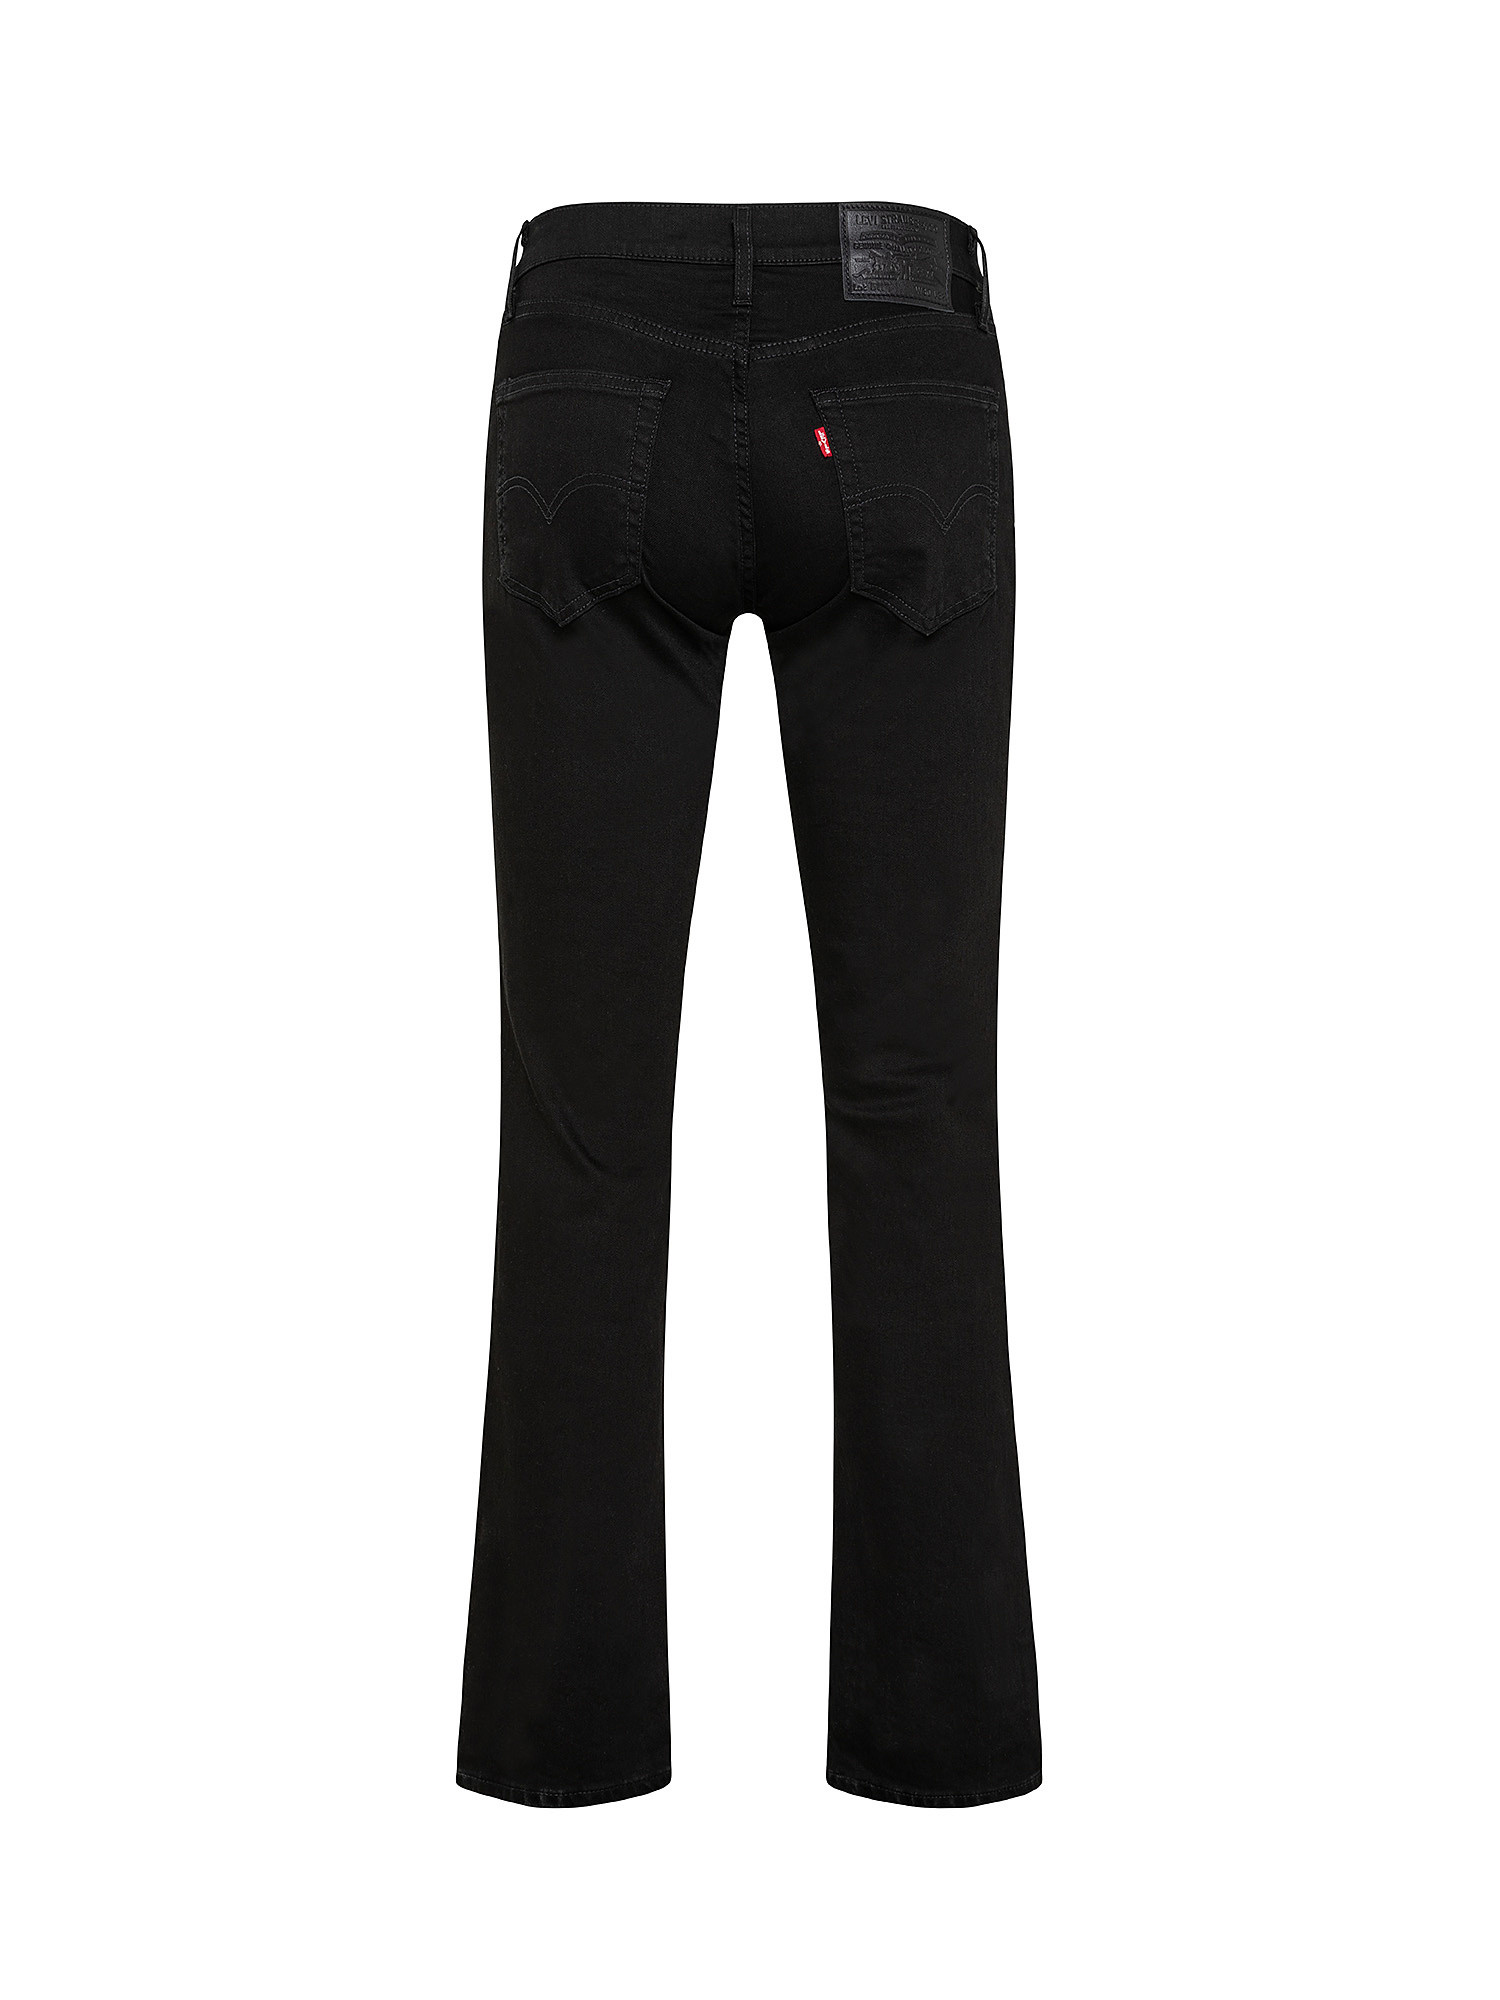 Jeans cinque tasche, Nero, large image number 1